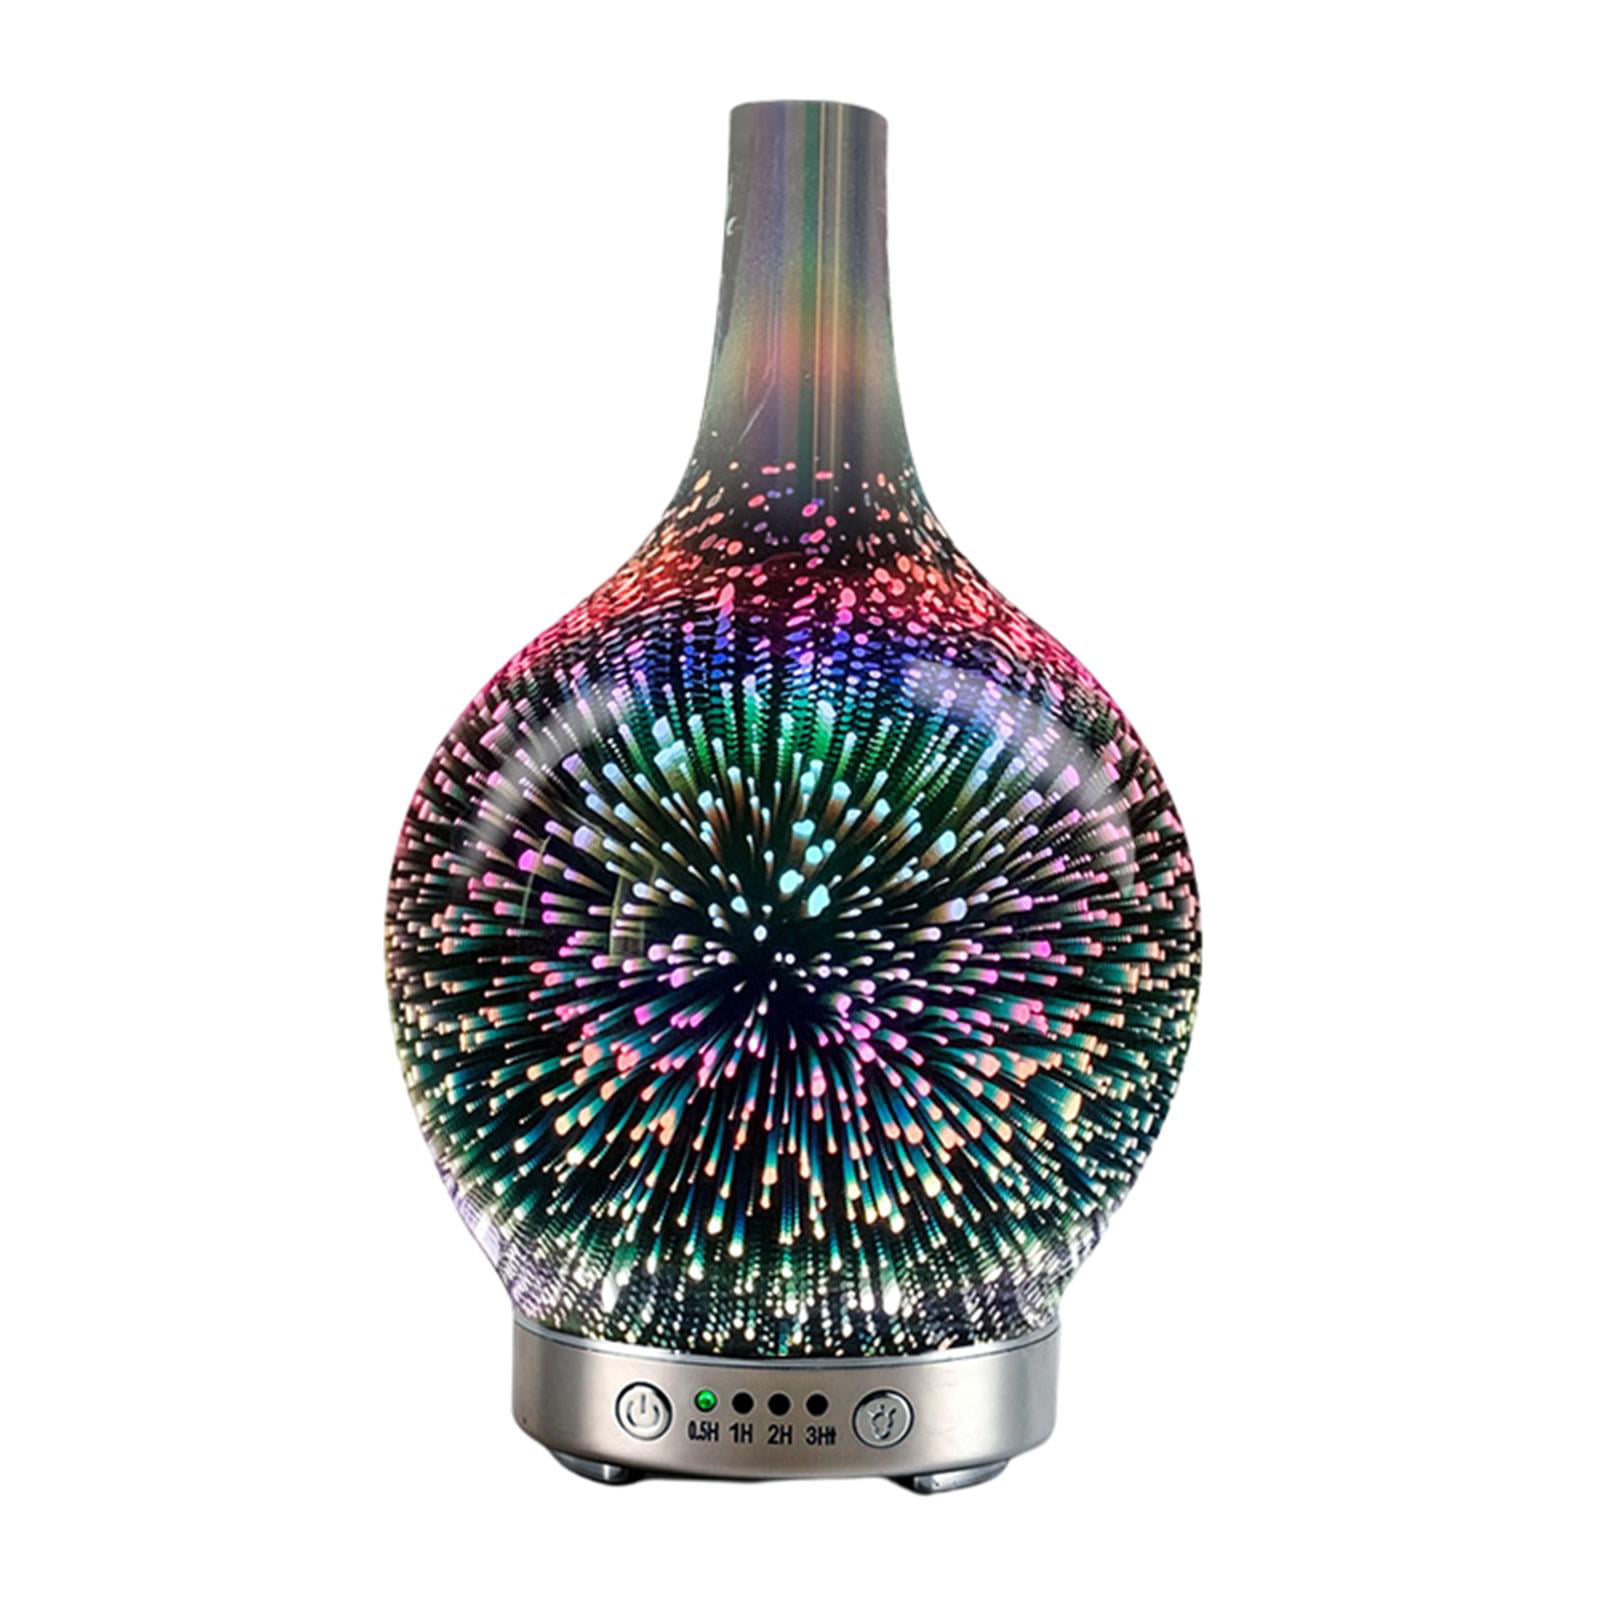 Home Essential Oil Diffuser 3D Firework Glass Aroma Diffuser Ultrasonic Hu B2Q2 